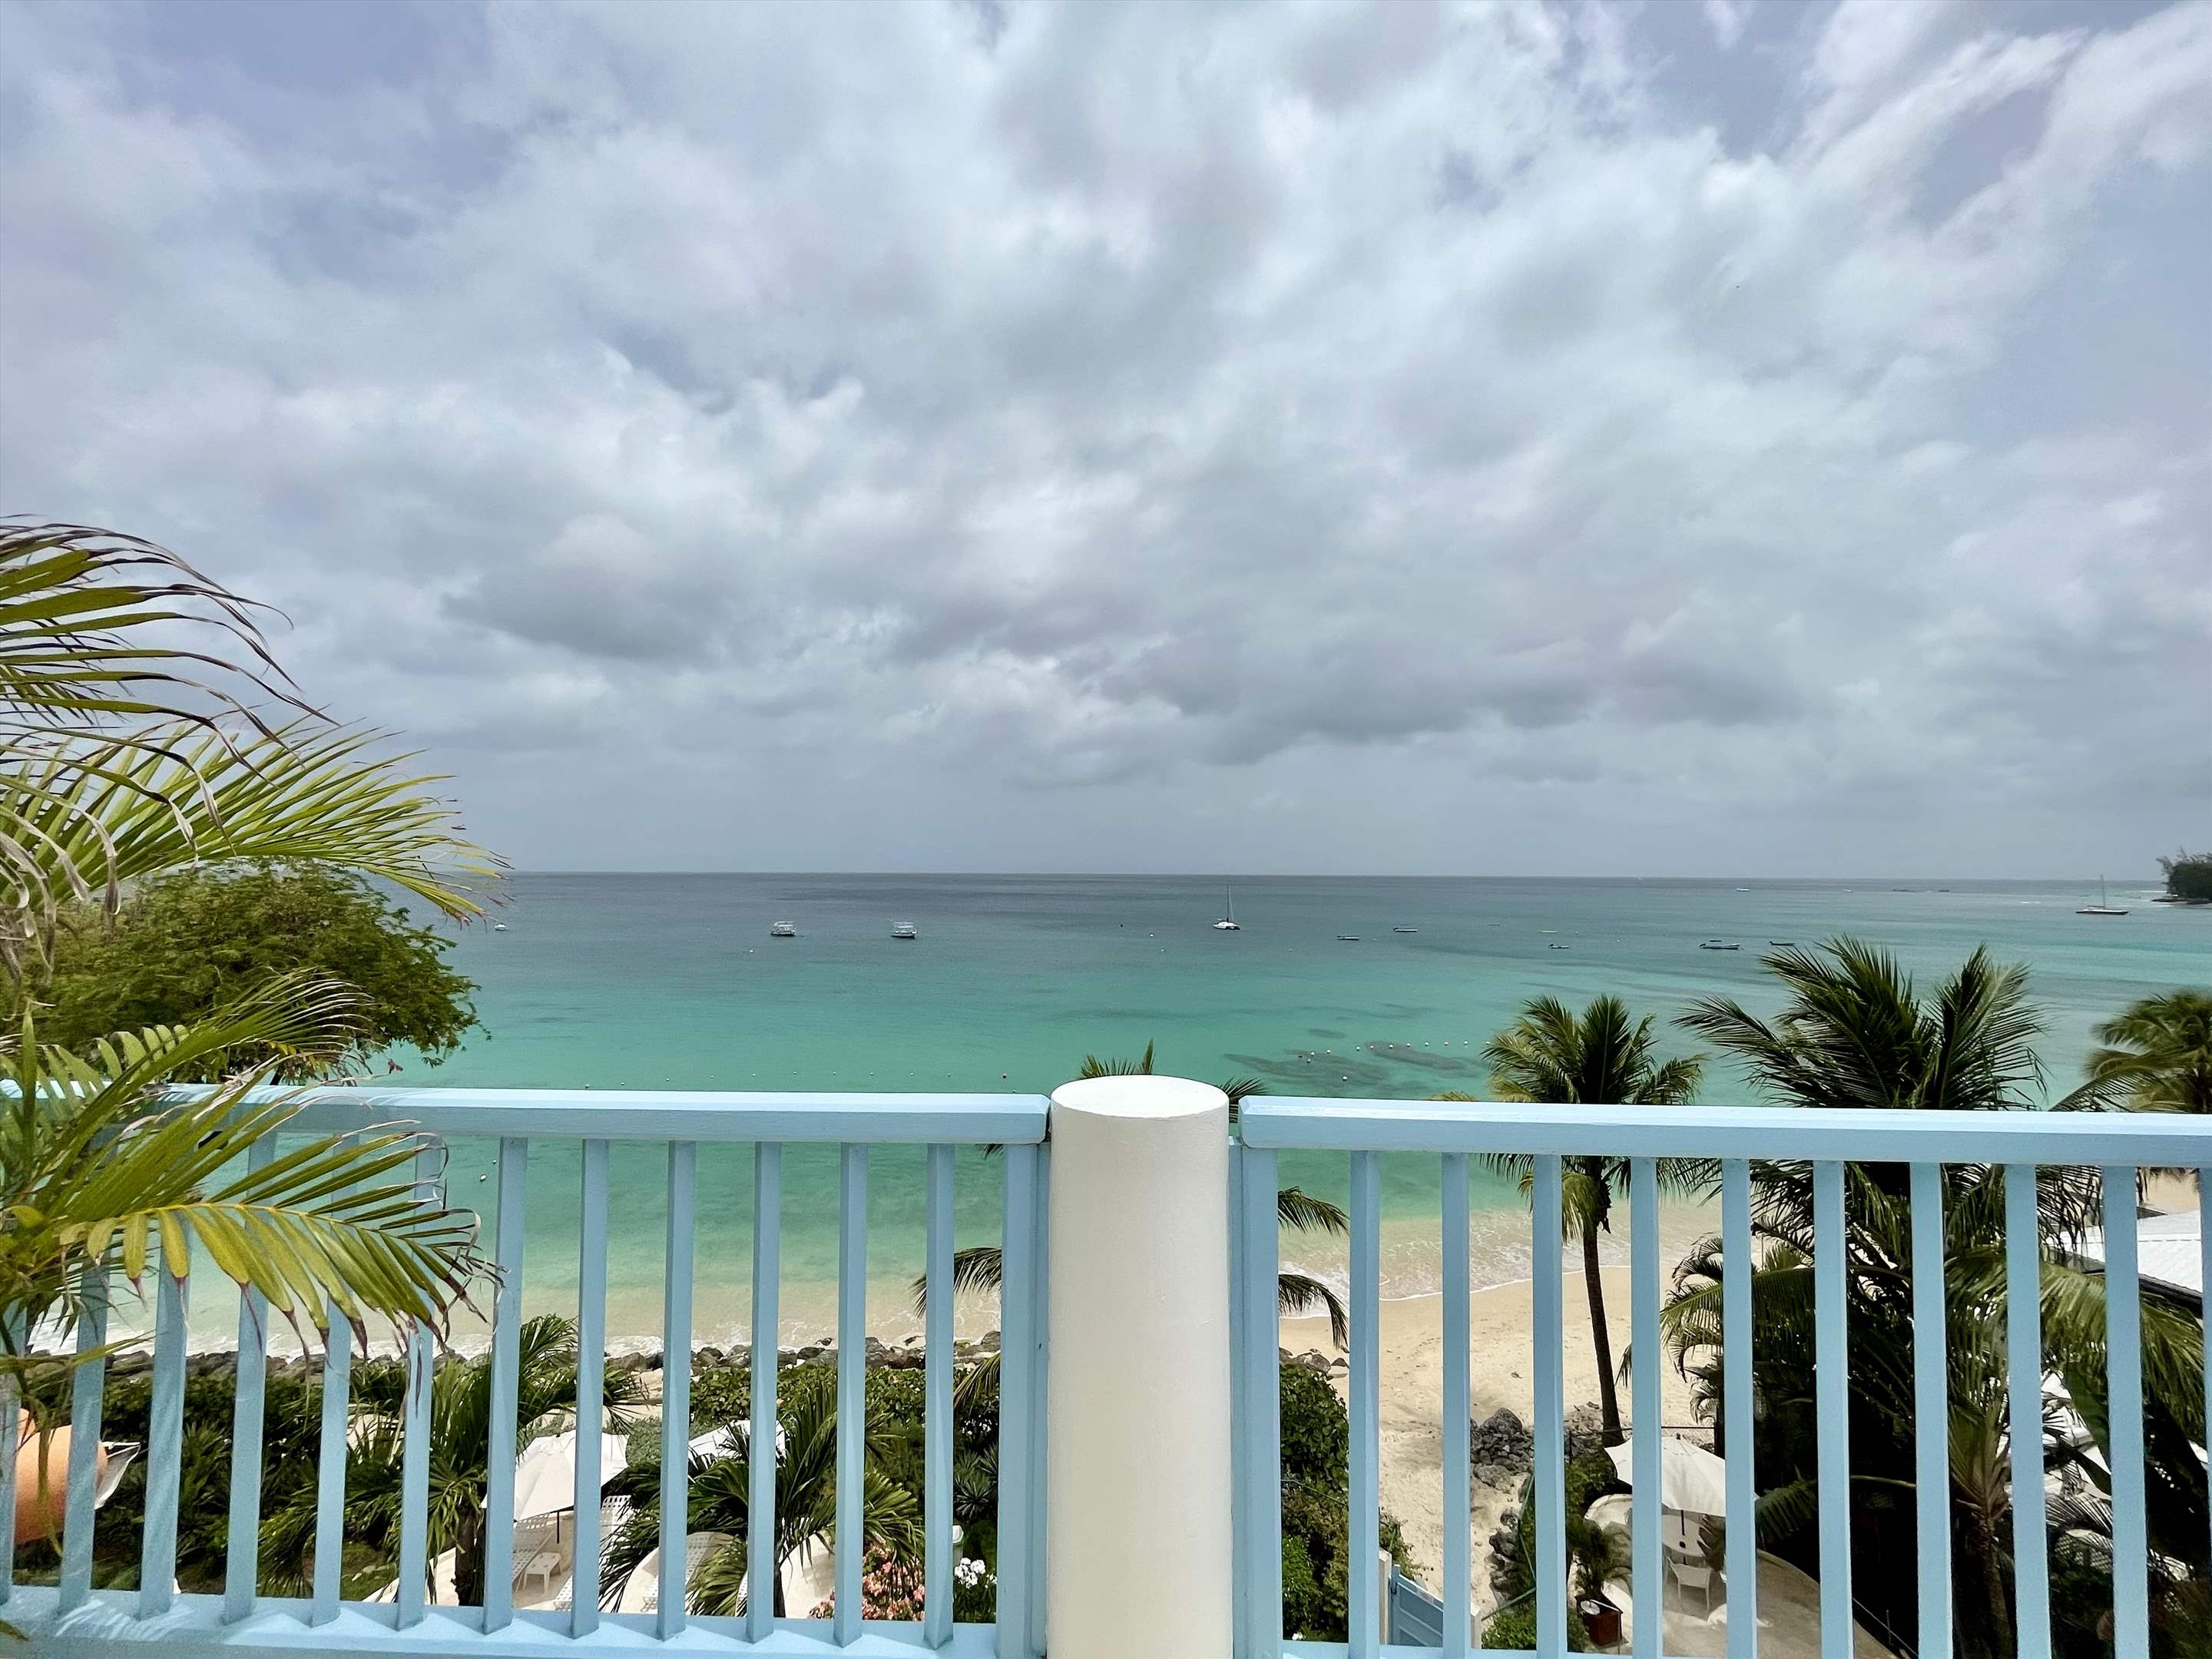 Villas on the Beach 403, 3 bedroom, 3 bedroom apartment in St. James & West Coast, Barbados Photo #21